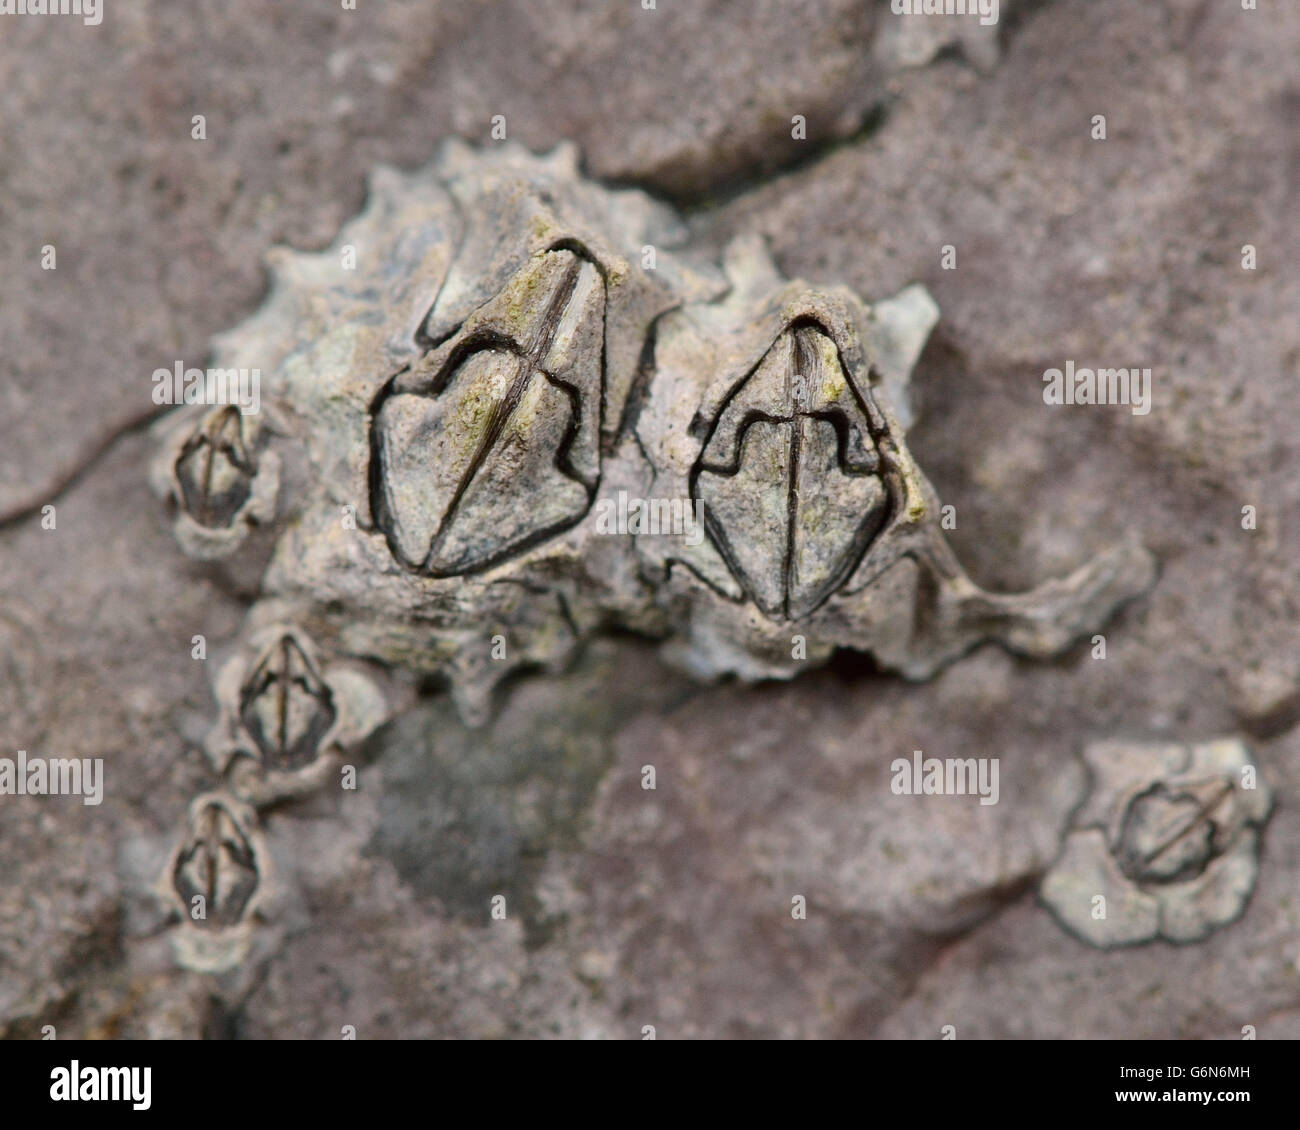 Acorn barnacle (Semibalanus balanoides). Cluster of crustaceans on rocks on British coast, in family Archaeobalanidae Stock Photo